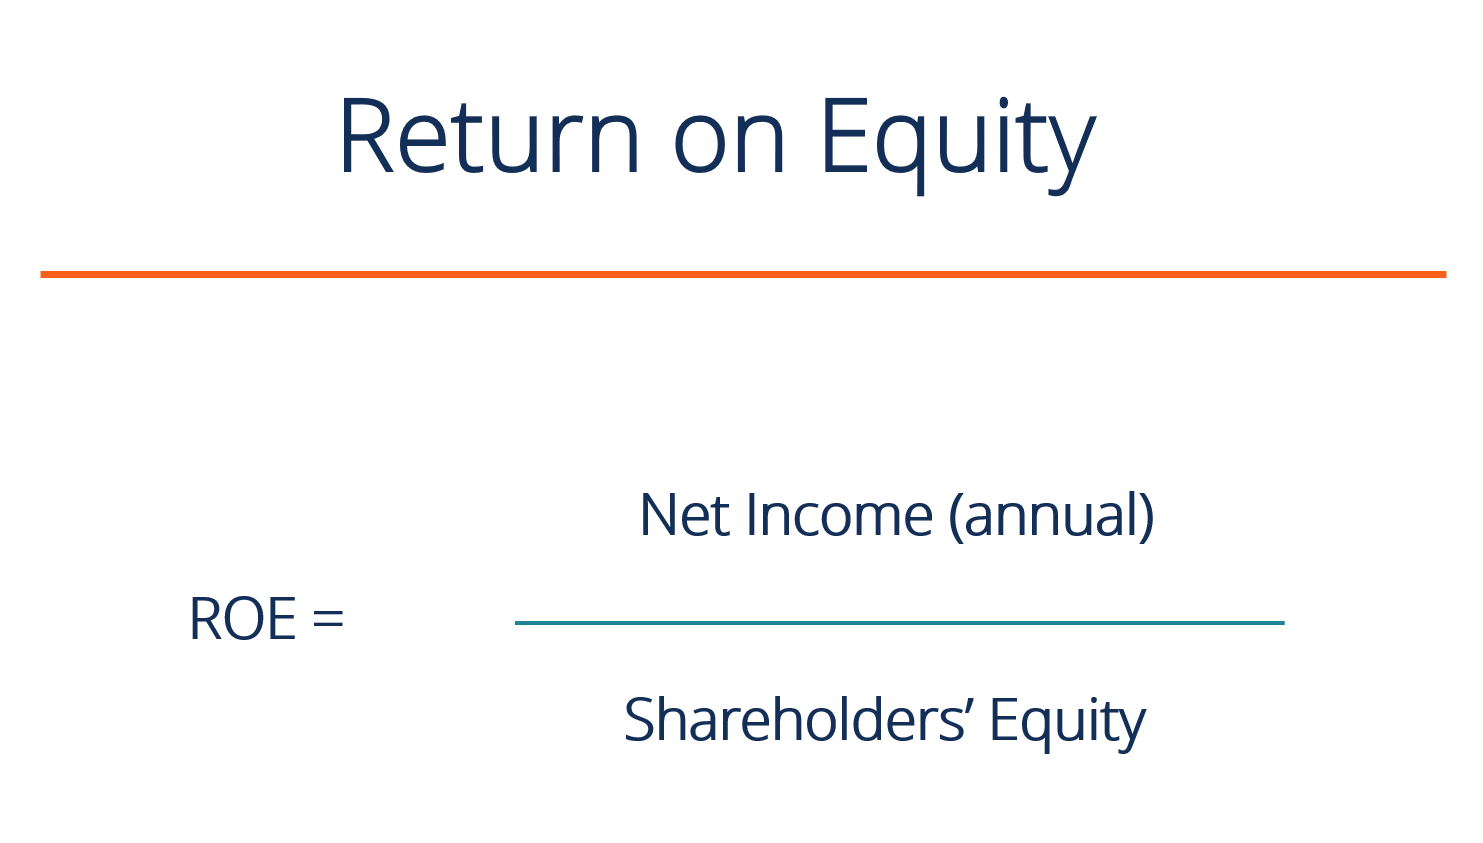 Return on Equity formula